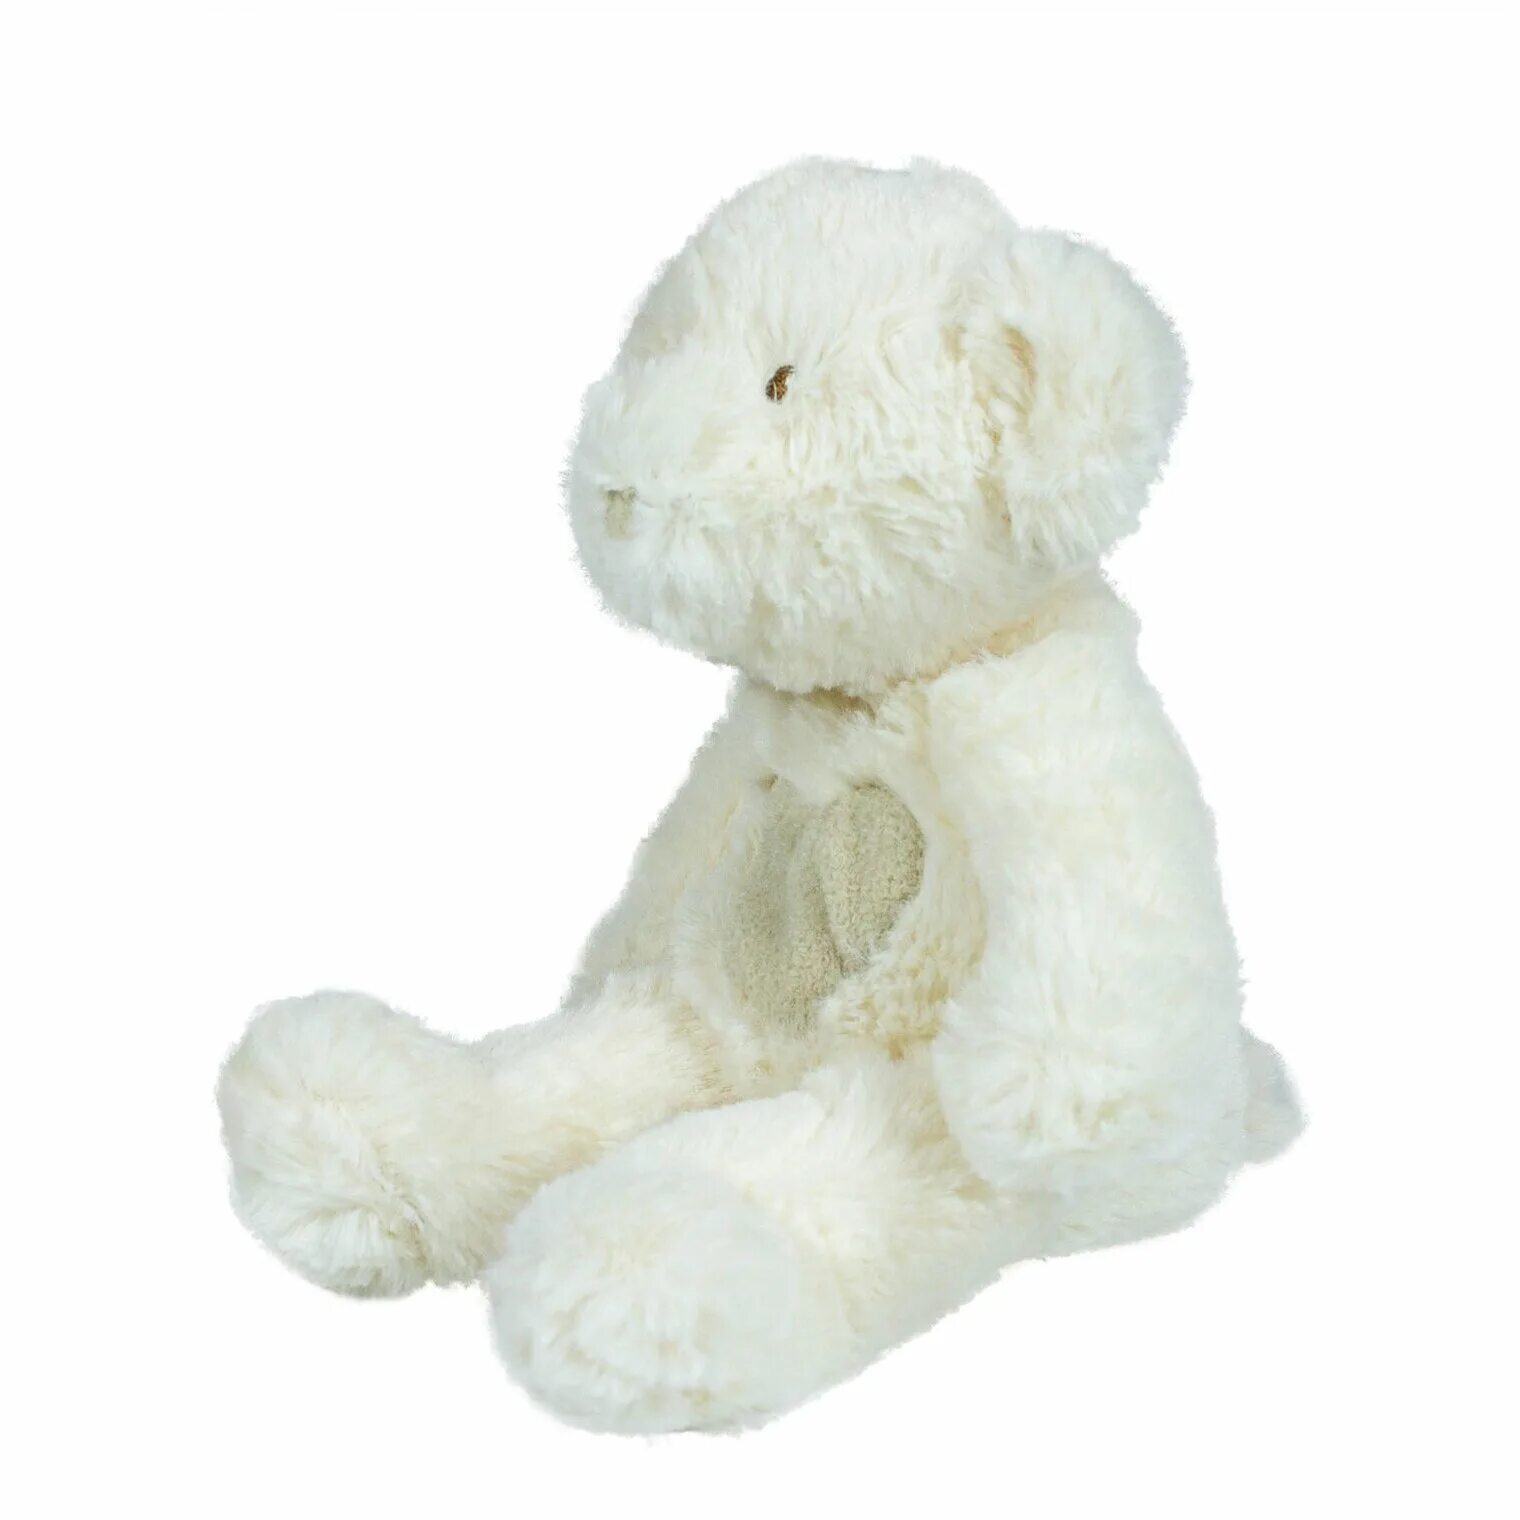 Тедди белый. Мишка Тедди белый. Мишка Тедди игрушка белый. Мягкая игрушка Медвежонок белого цвета. Мягкие игрушки Teddy.